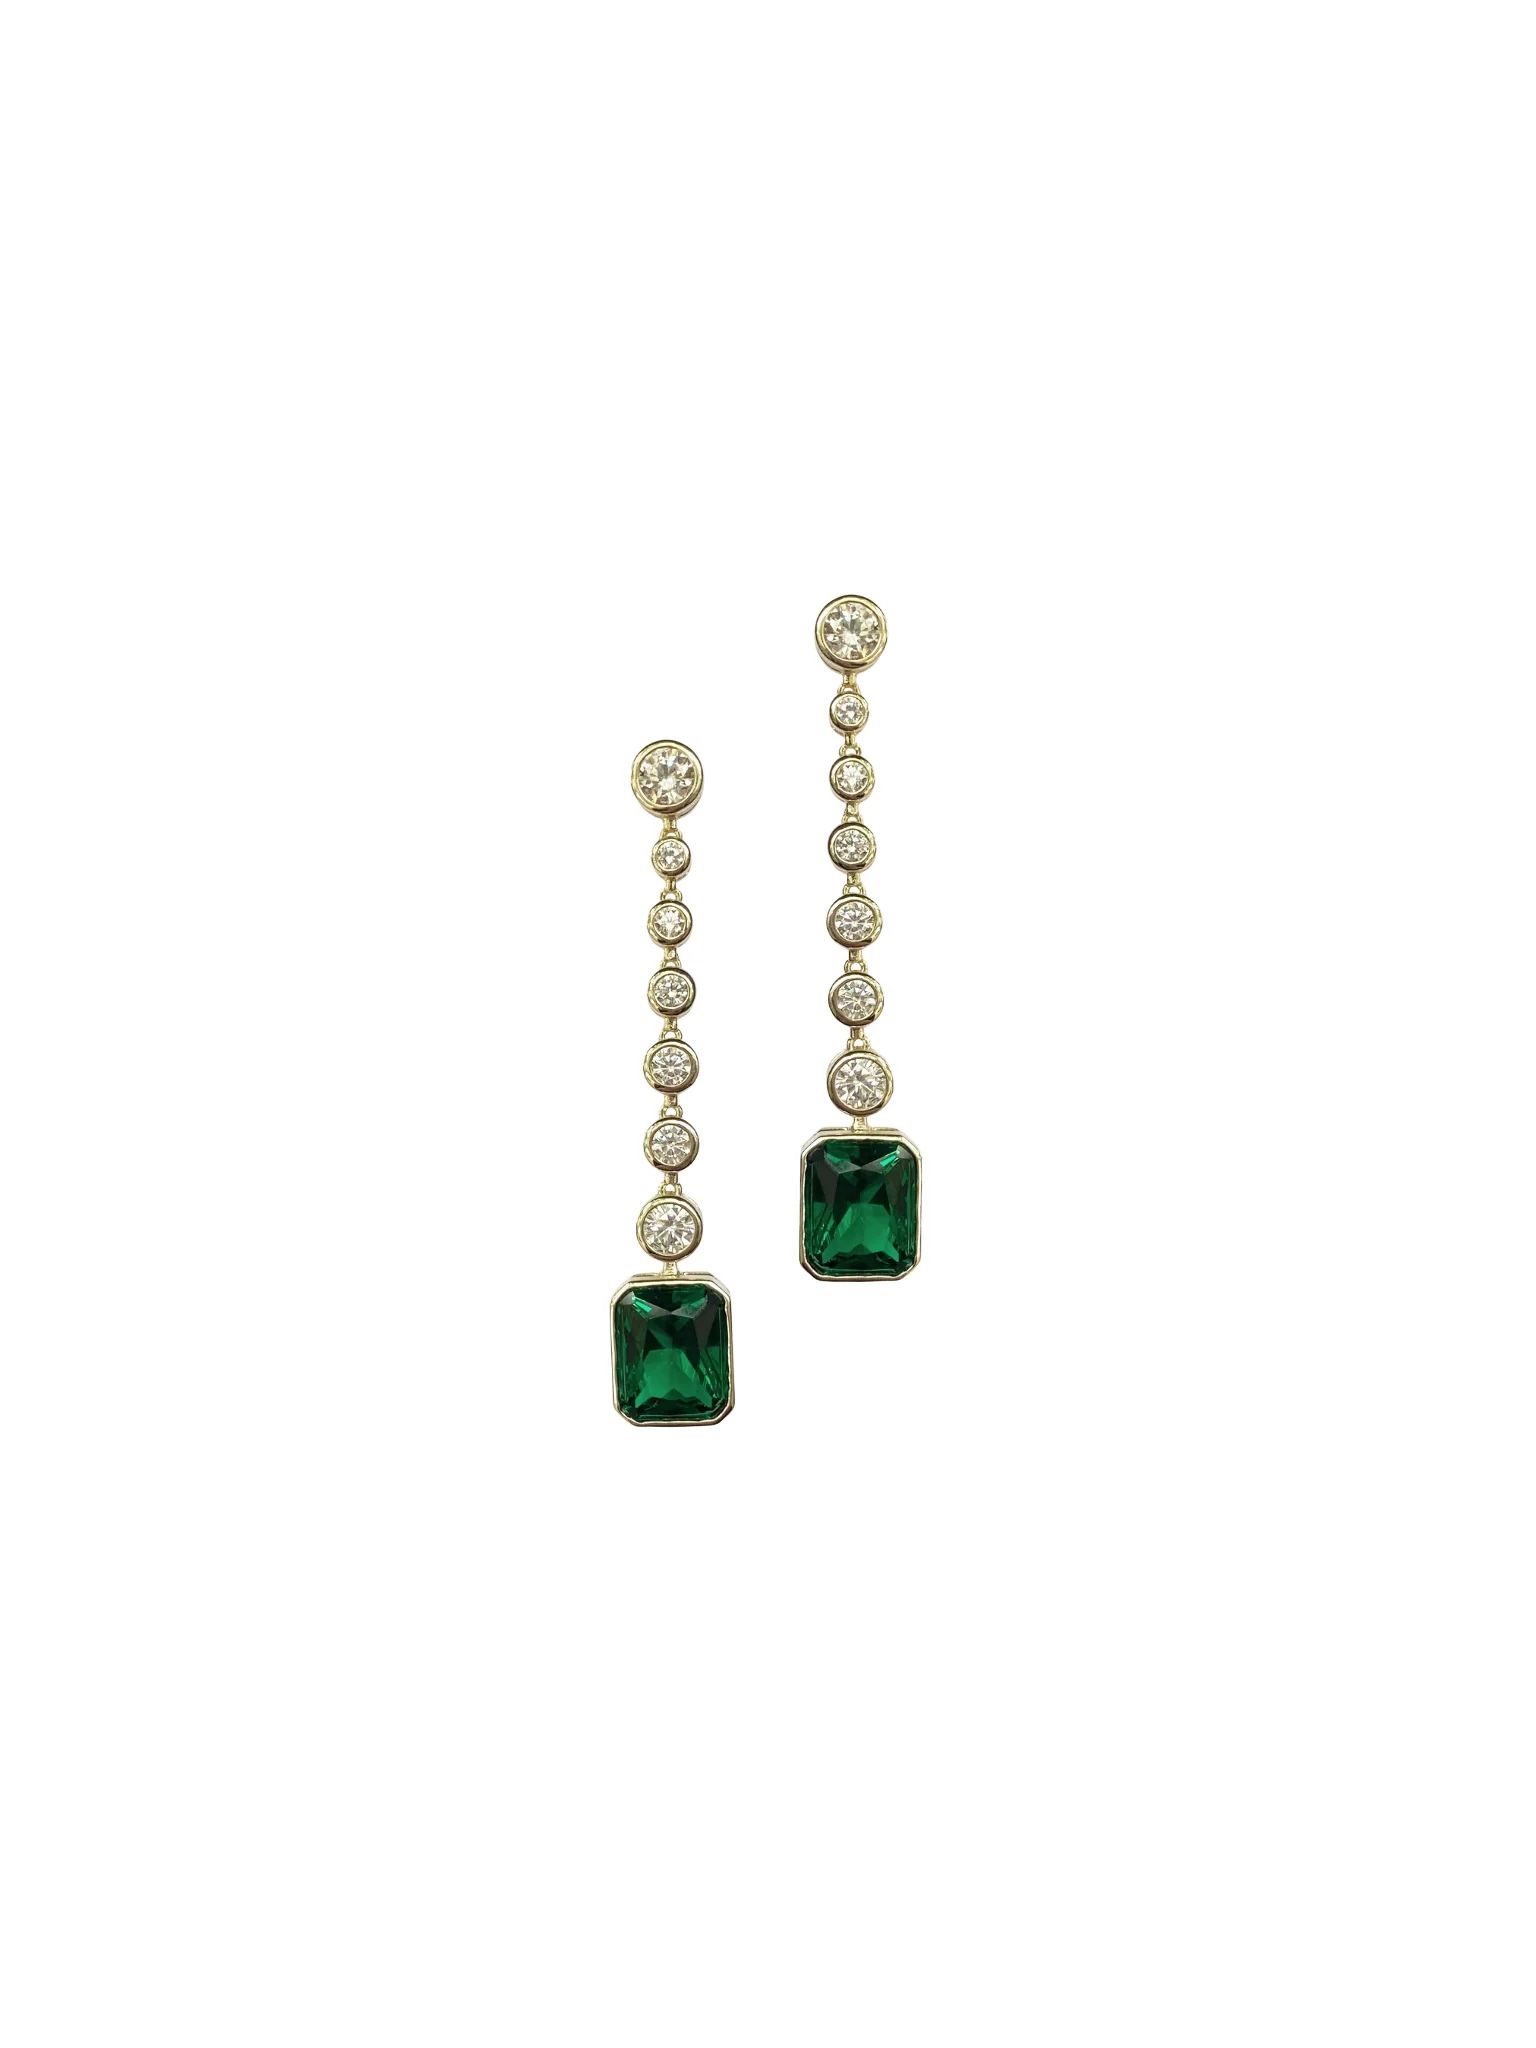 Emerald Bezel drops | Nicola Bathie Jewelry